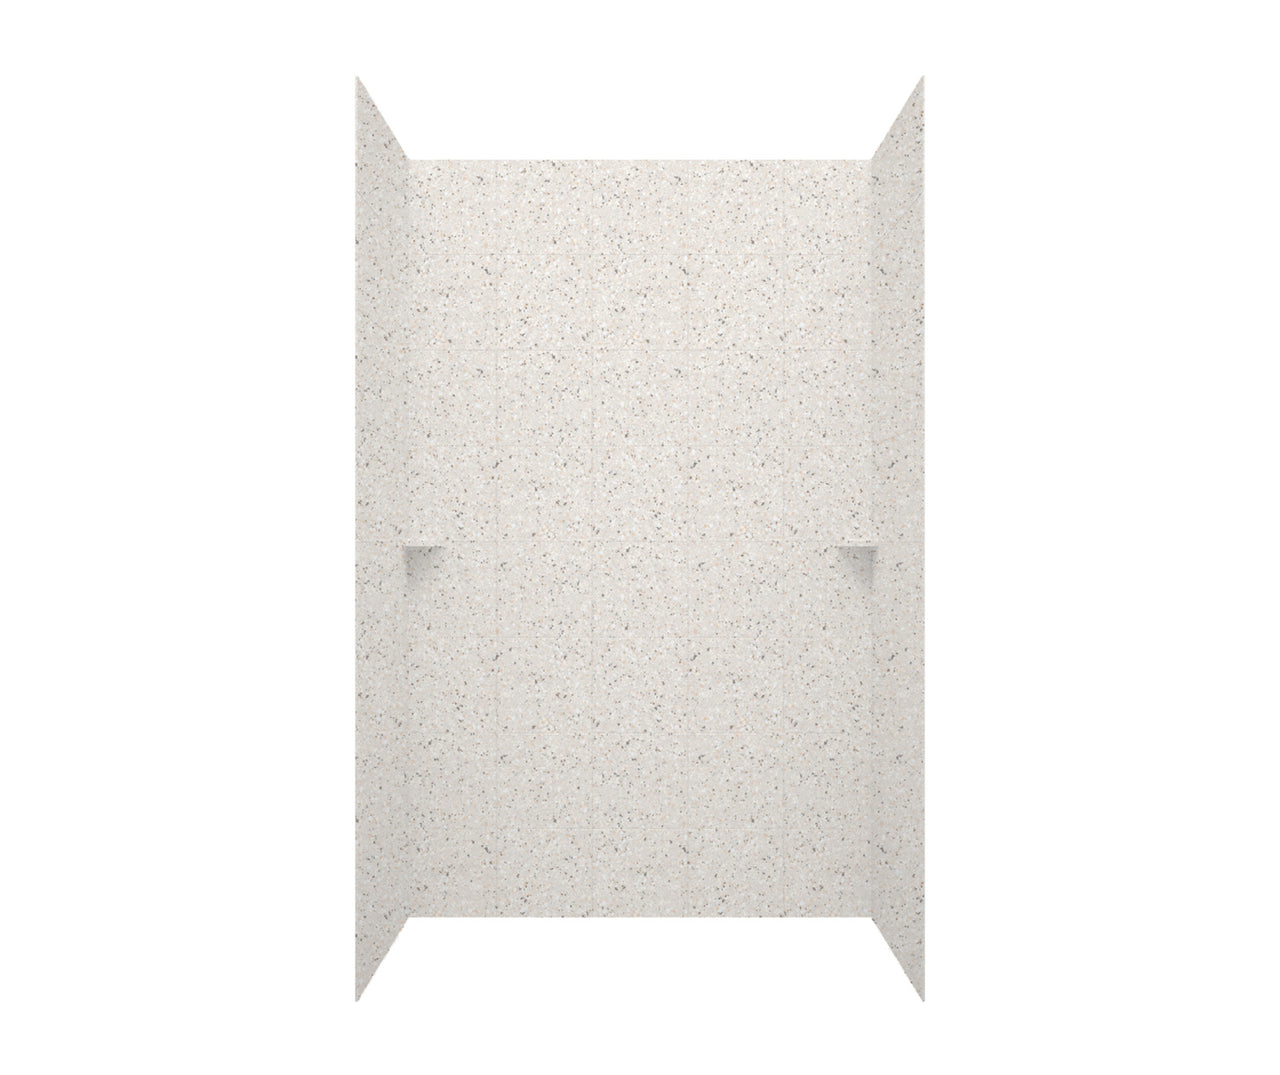 SQMK96-3662 36 x 62 x 96 Swanstone Square Tile Glue up Shower Wall Kit in Bermuda Sand